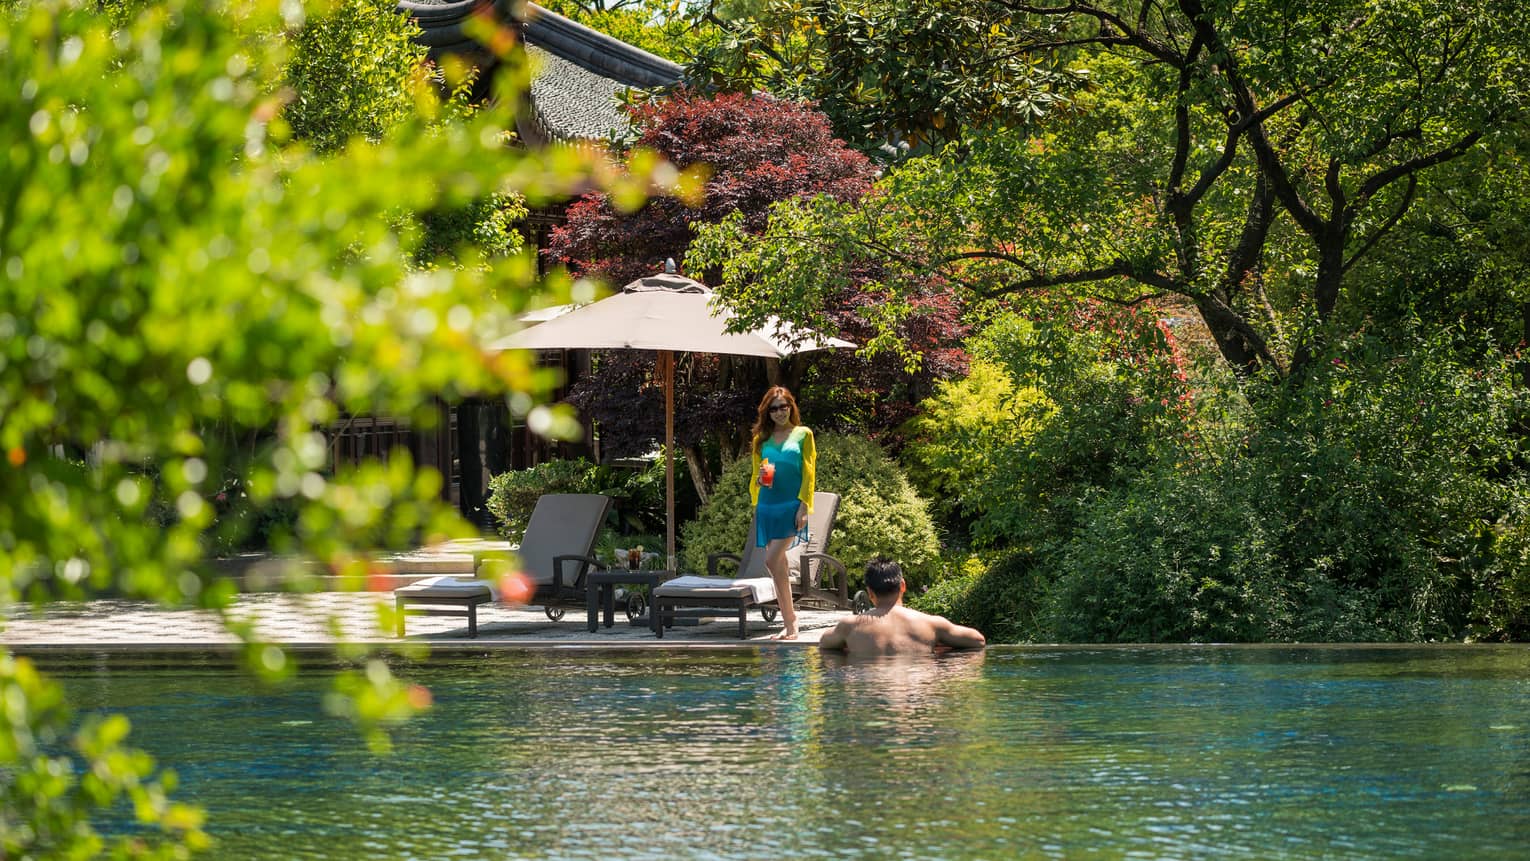 Woman in blue dress walks towards man wading in outdoor swimming pool